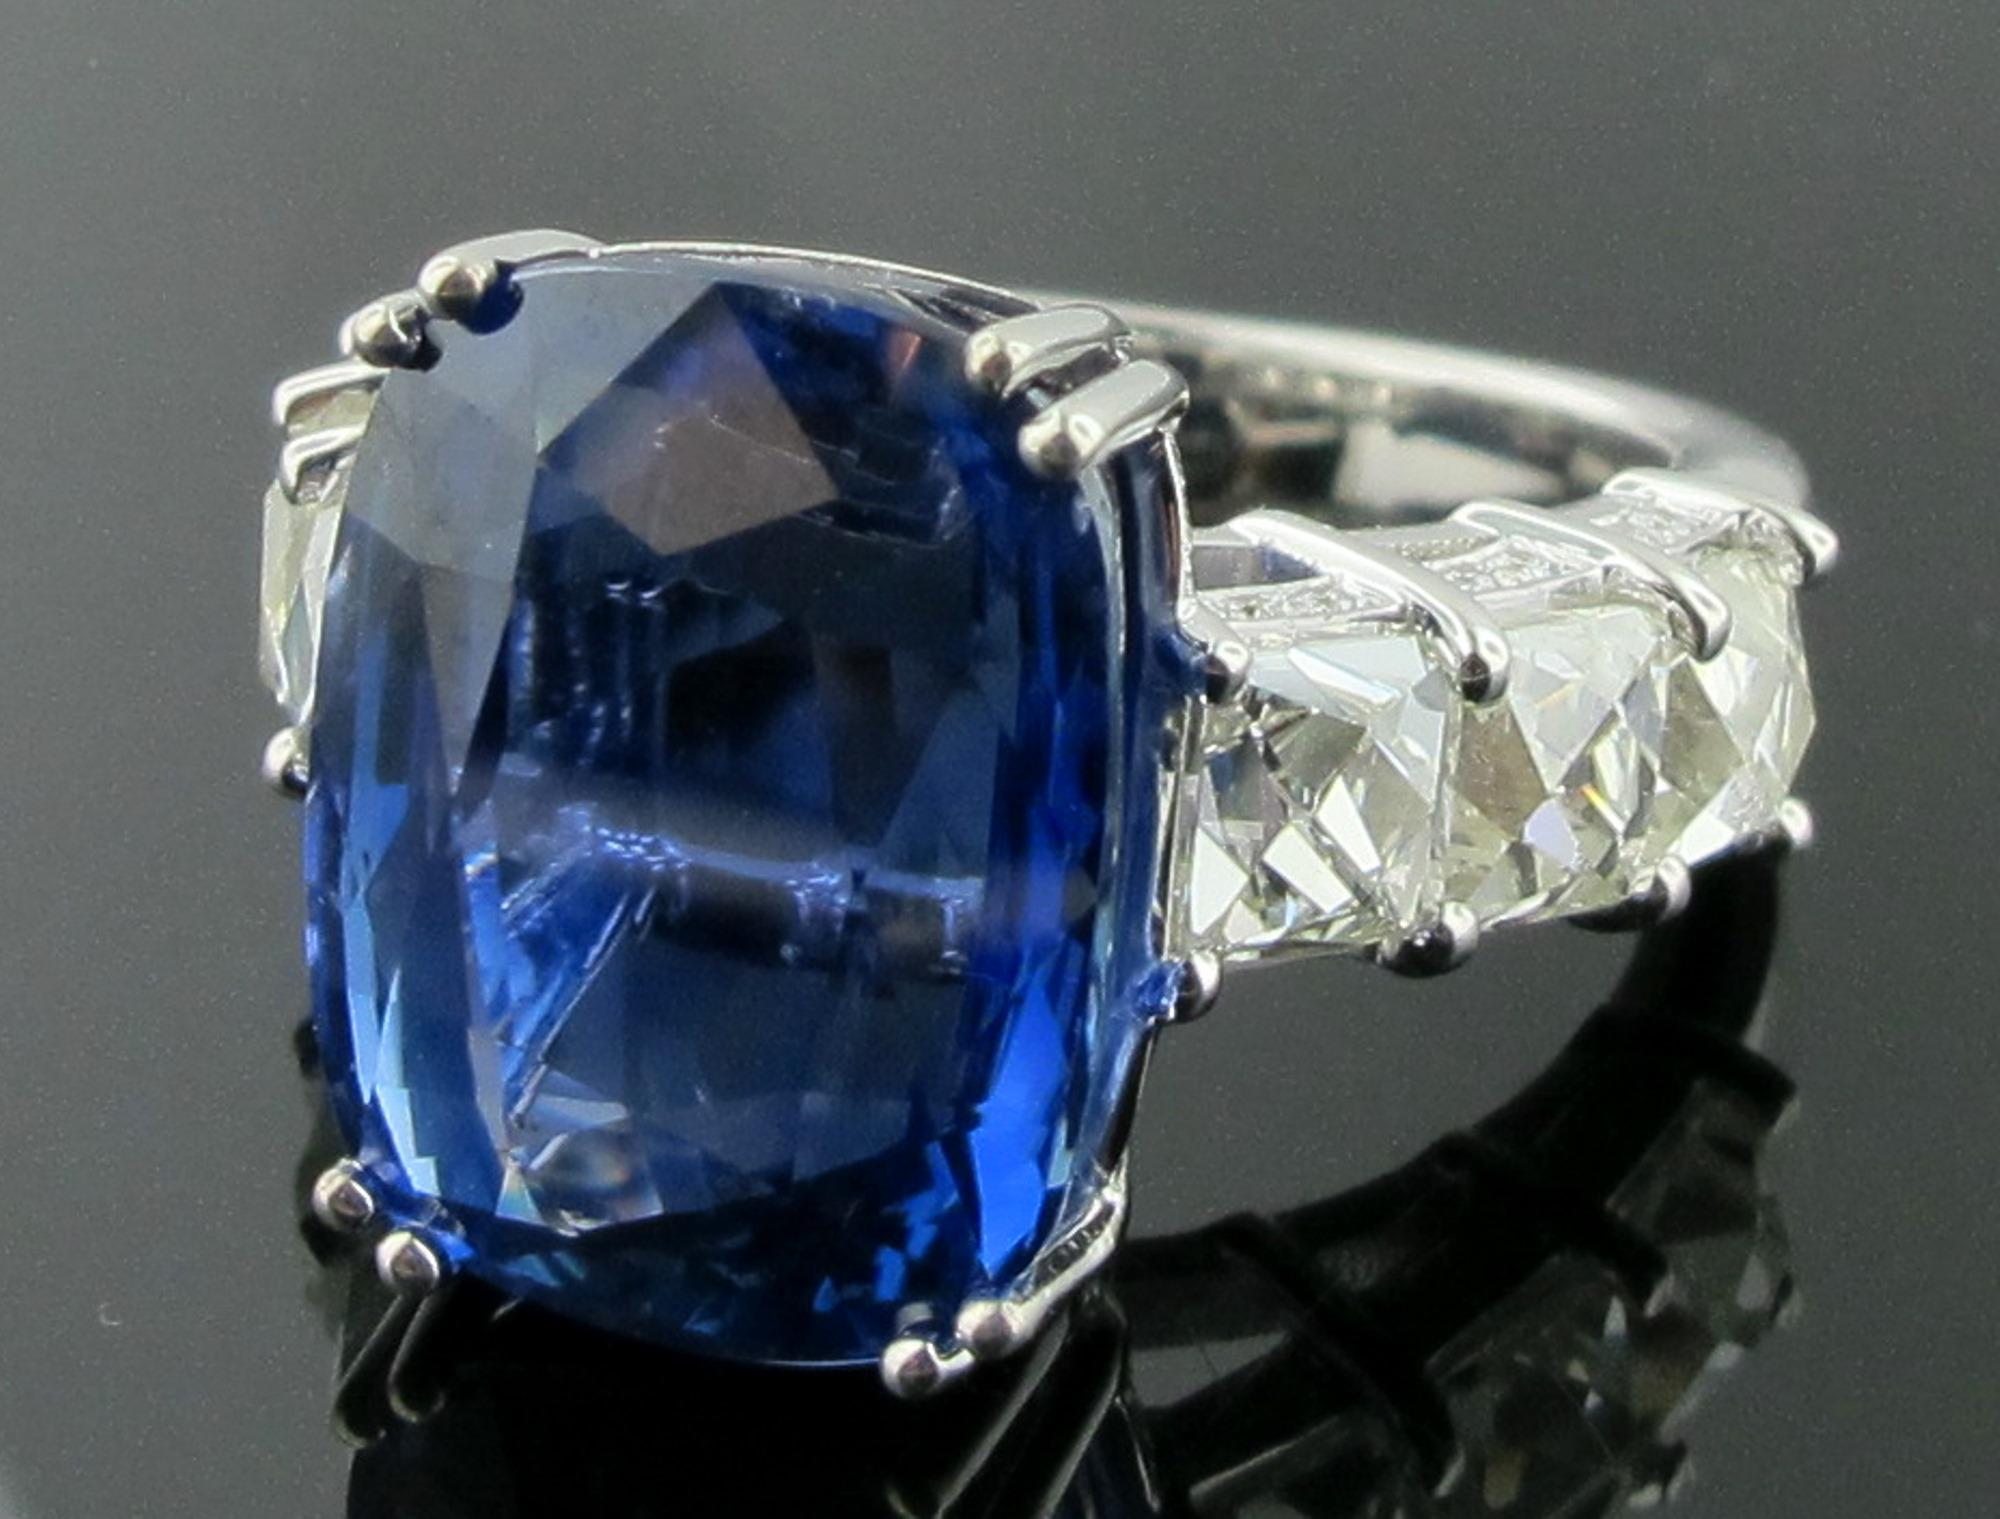 Cushion Cut GIA Certified 13.97 Carat Burma No-Heat Blue Sapphire Diamond Ring in Platinum